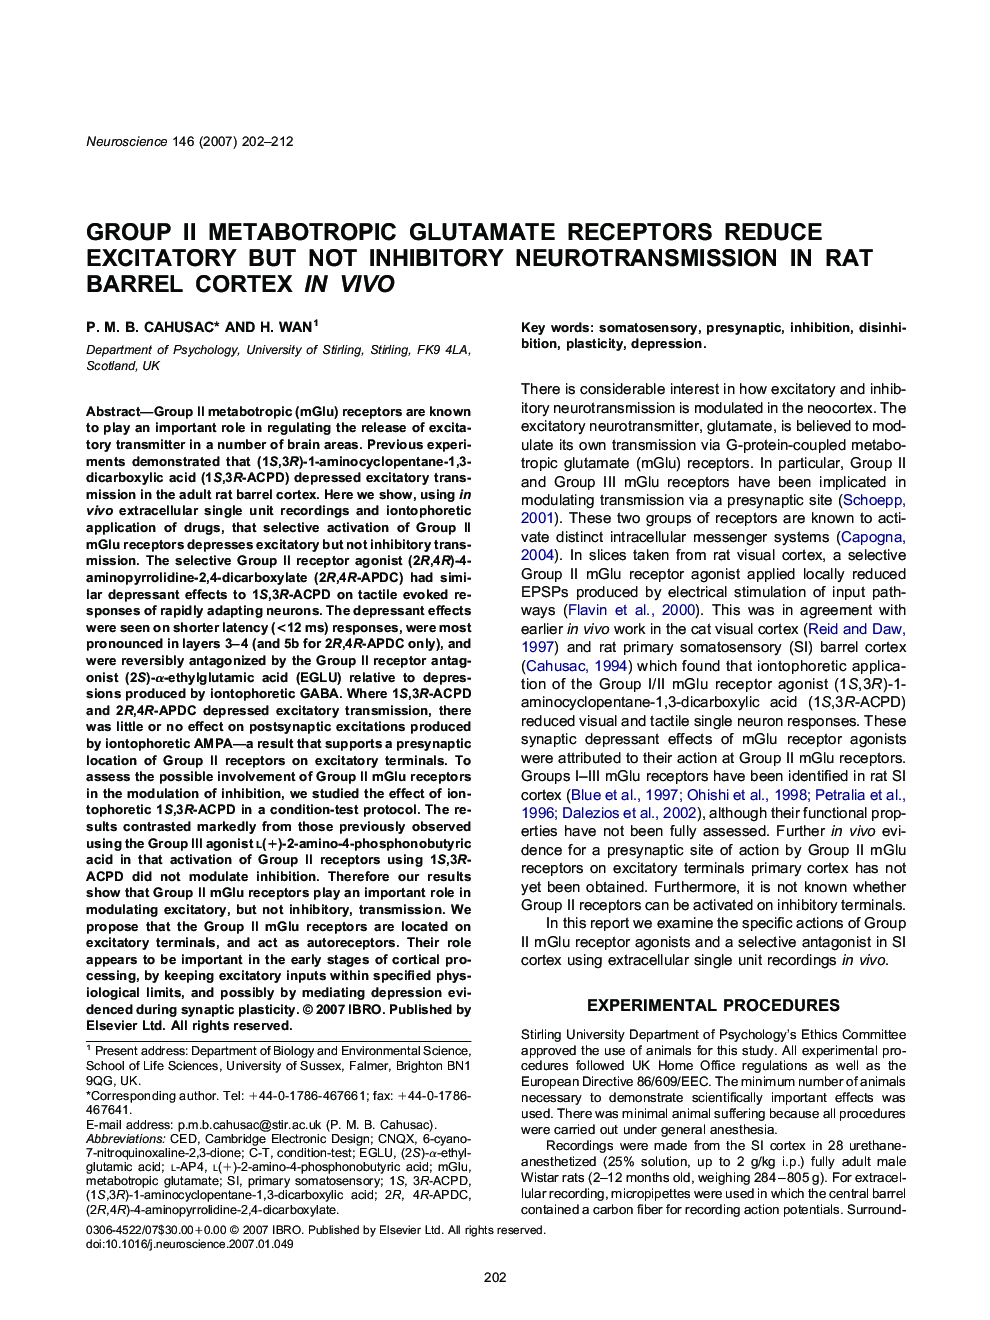 Group II metabotropic glutamate receptors reduce excitatory but not inhibitory neurotransmission in rat barrel cortex in vivo